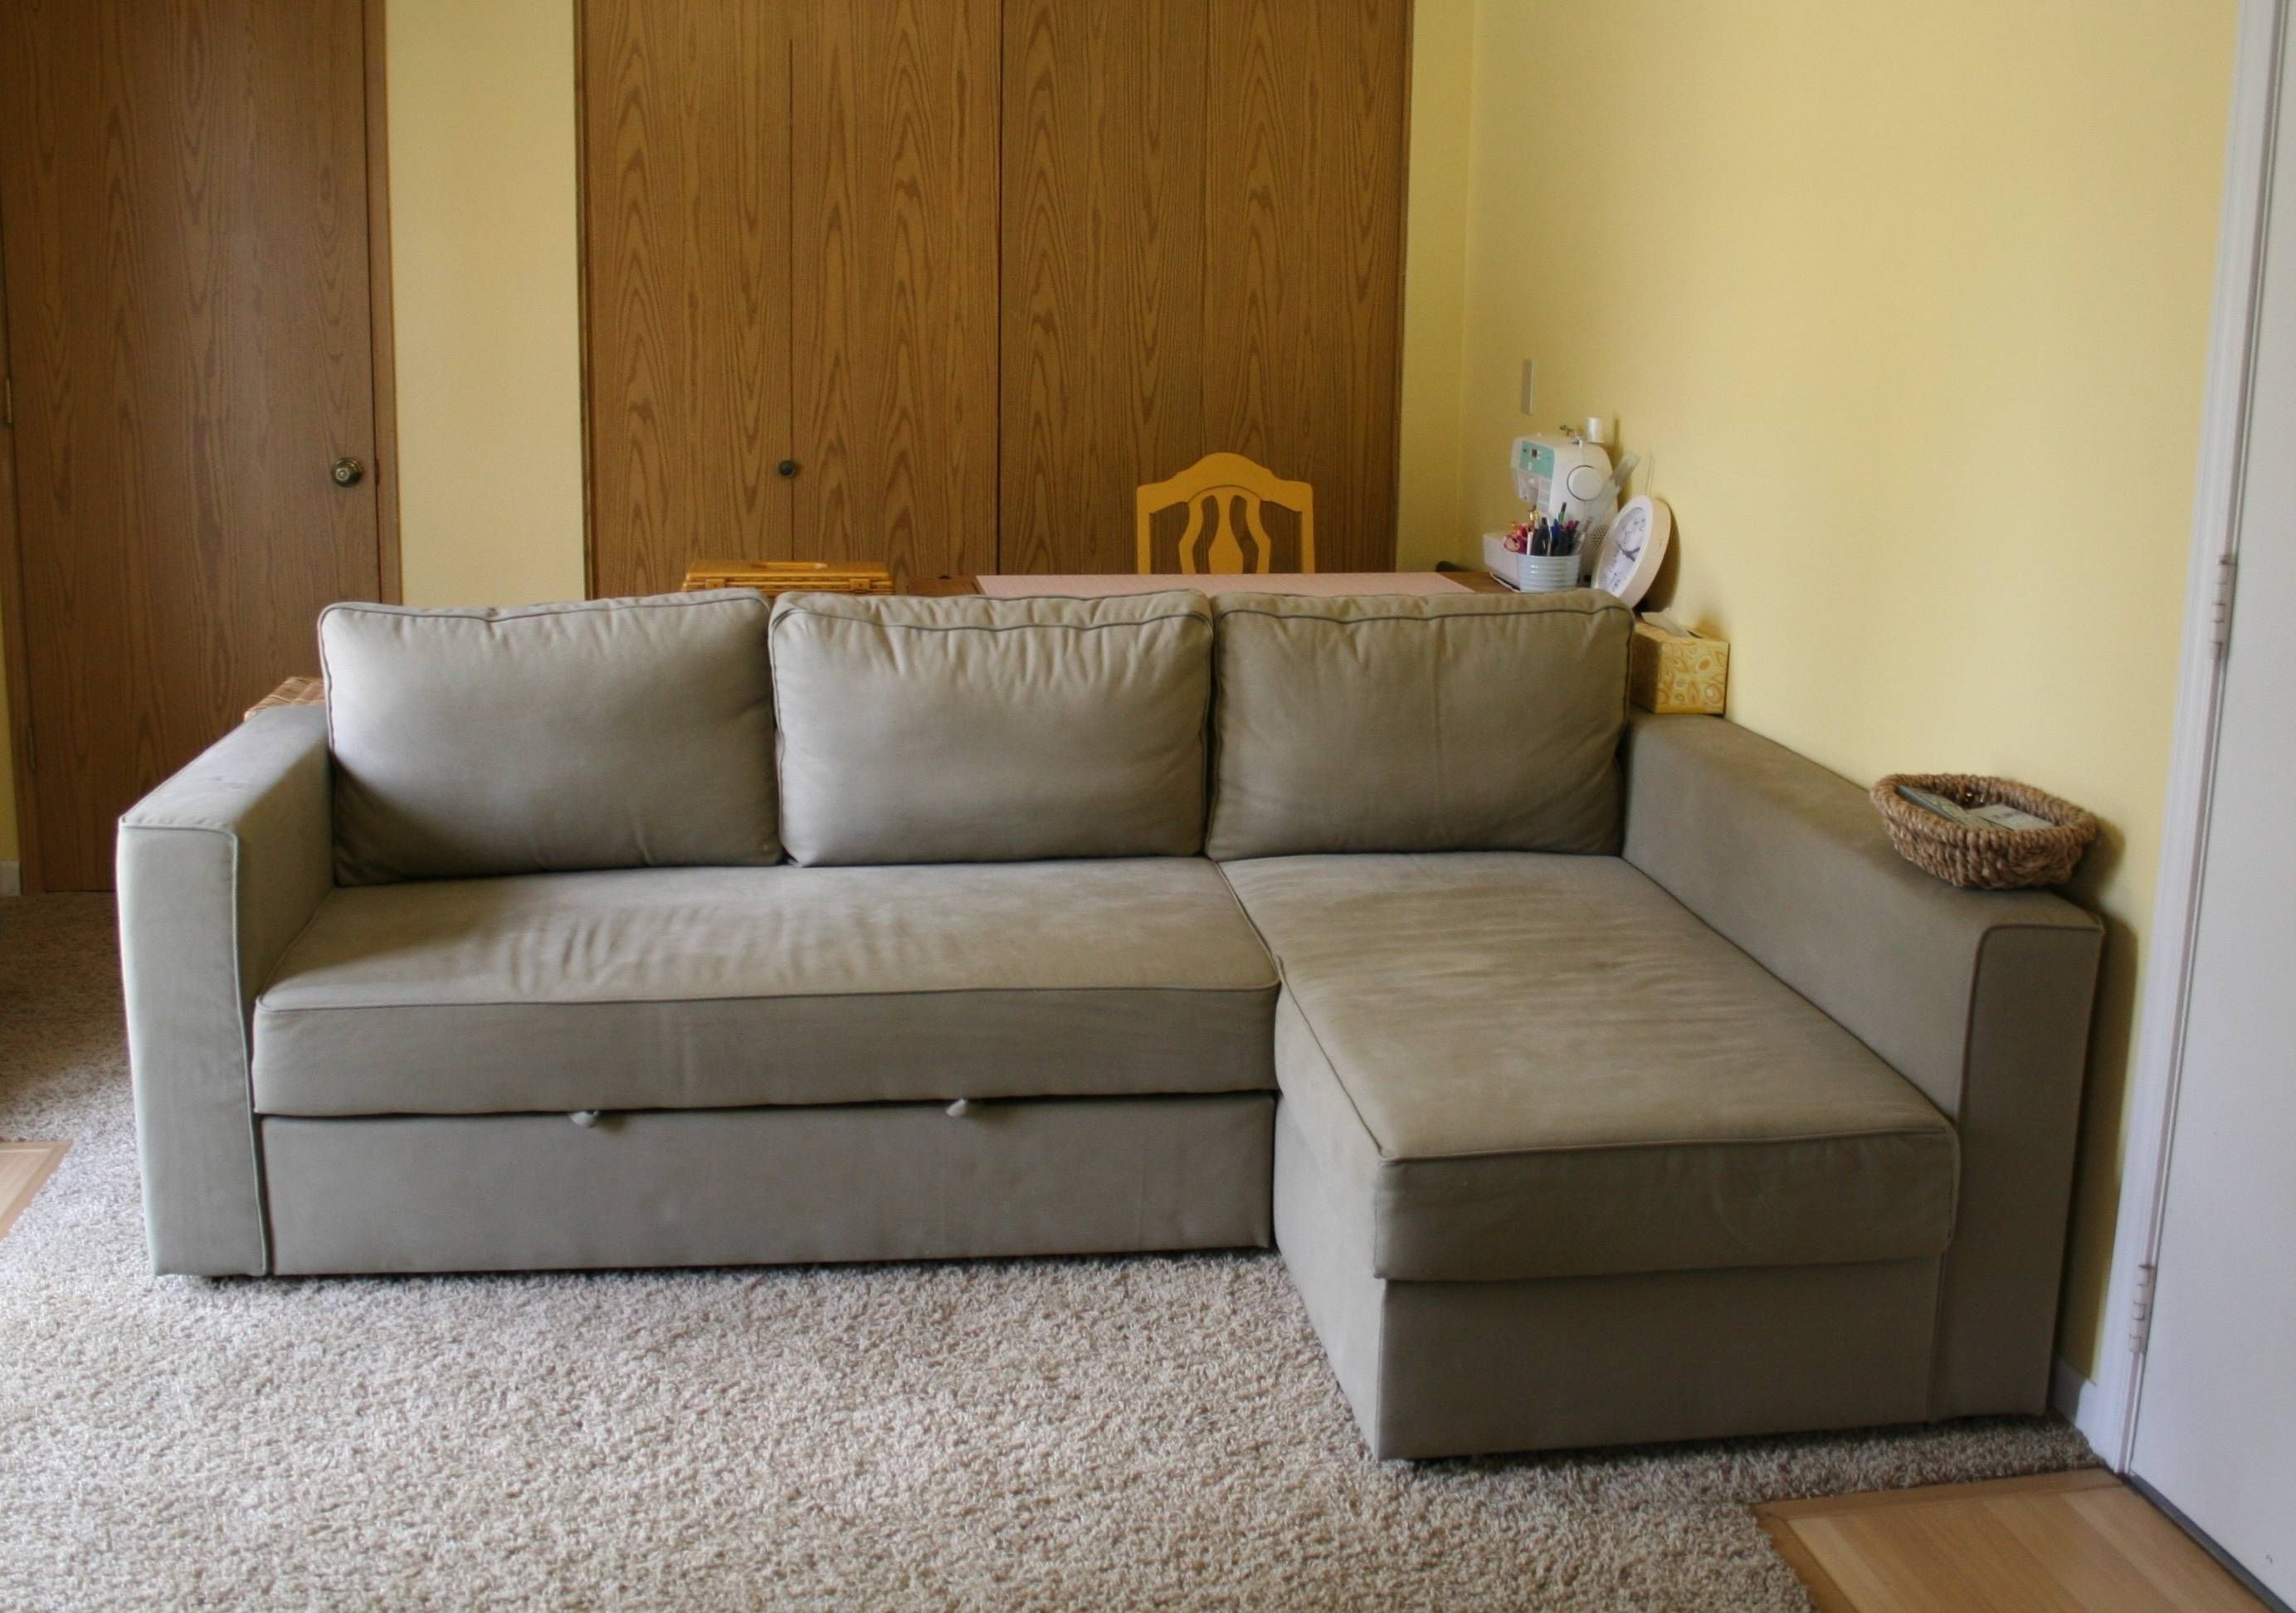 cheap corner sofa bed sydney